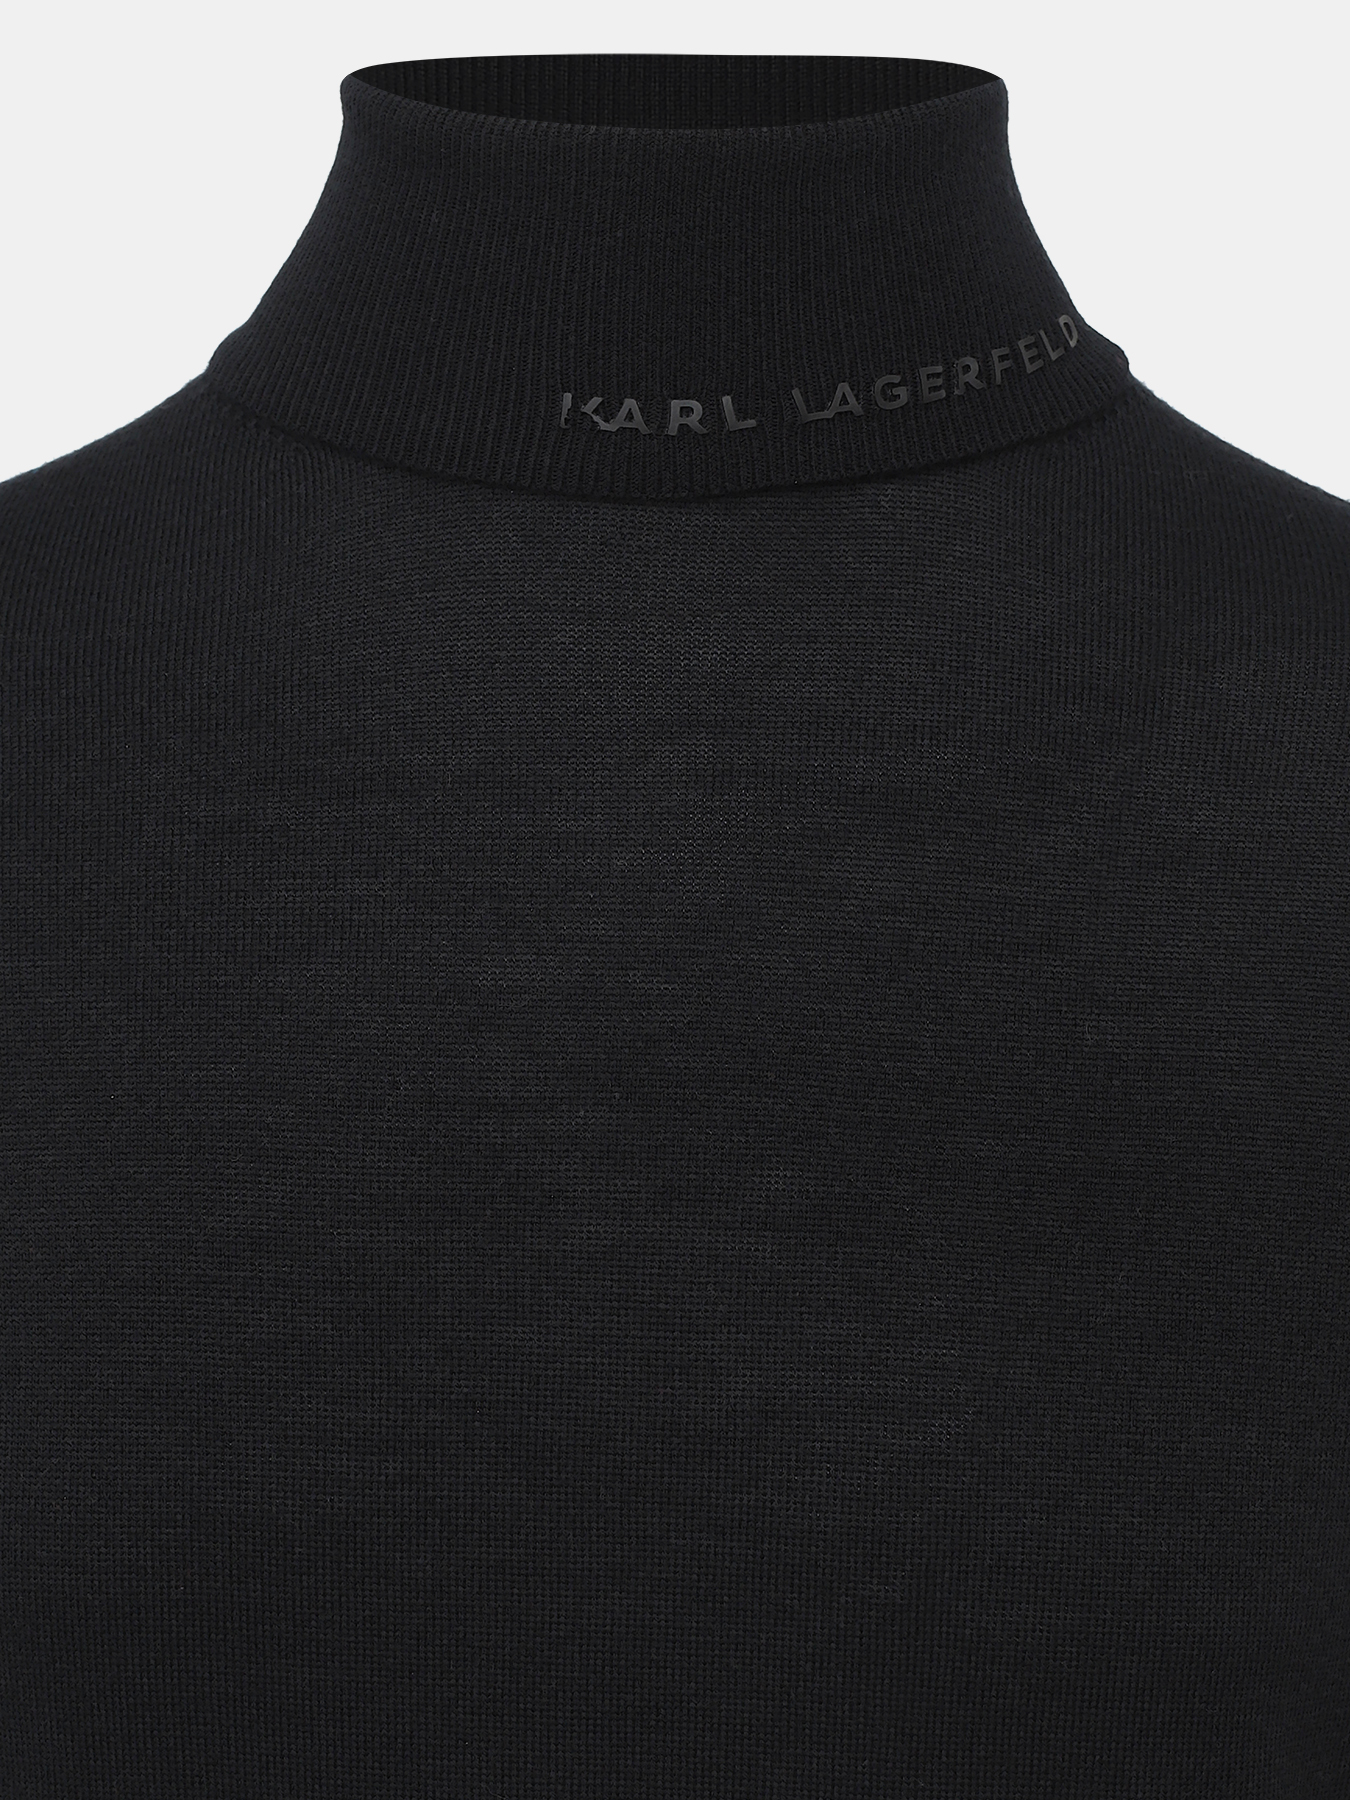 Свитер Karl Lagerfeld 420304-042, цвет черный, размер 46-48 - фото 2